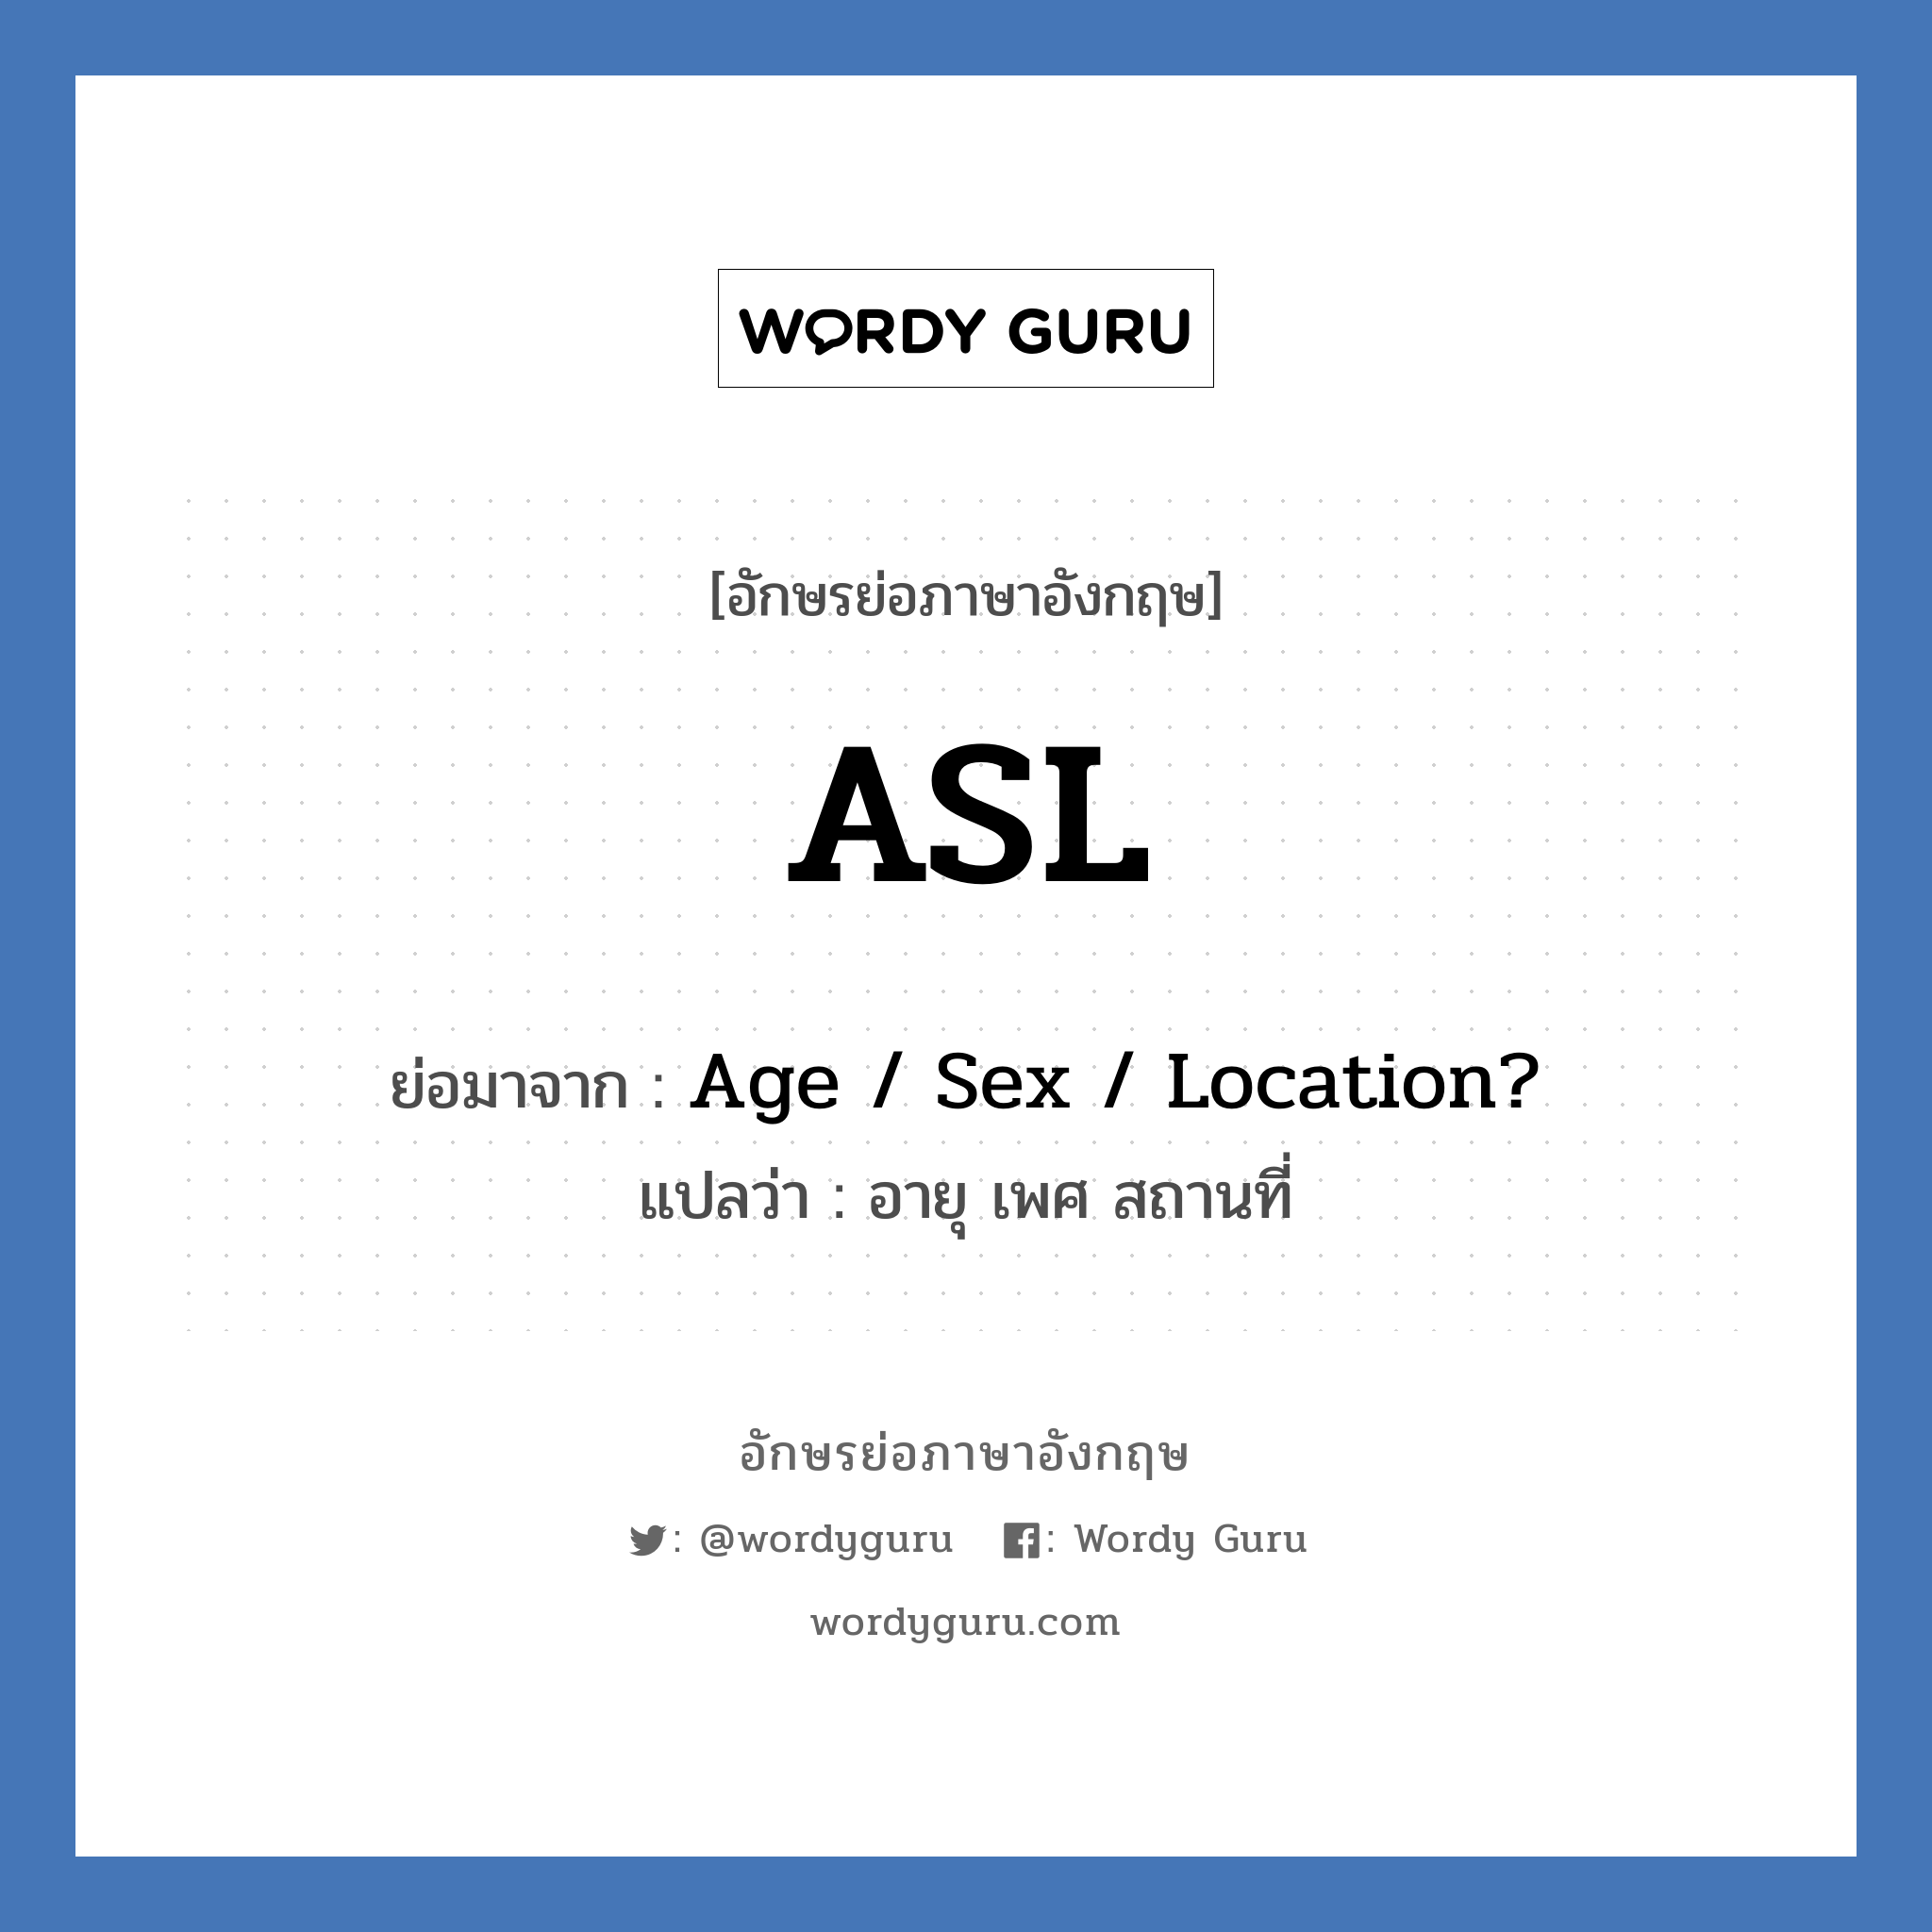 Age / Sex / Location? คำย่อคือ? แปลว่า?, อักษรย่อภาษาอังกฤษ Age / Sex / Location? ย่อมาจาก ASL แปลว่า อายุ เพศ สถานที่